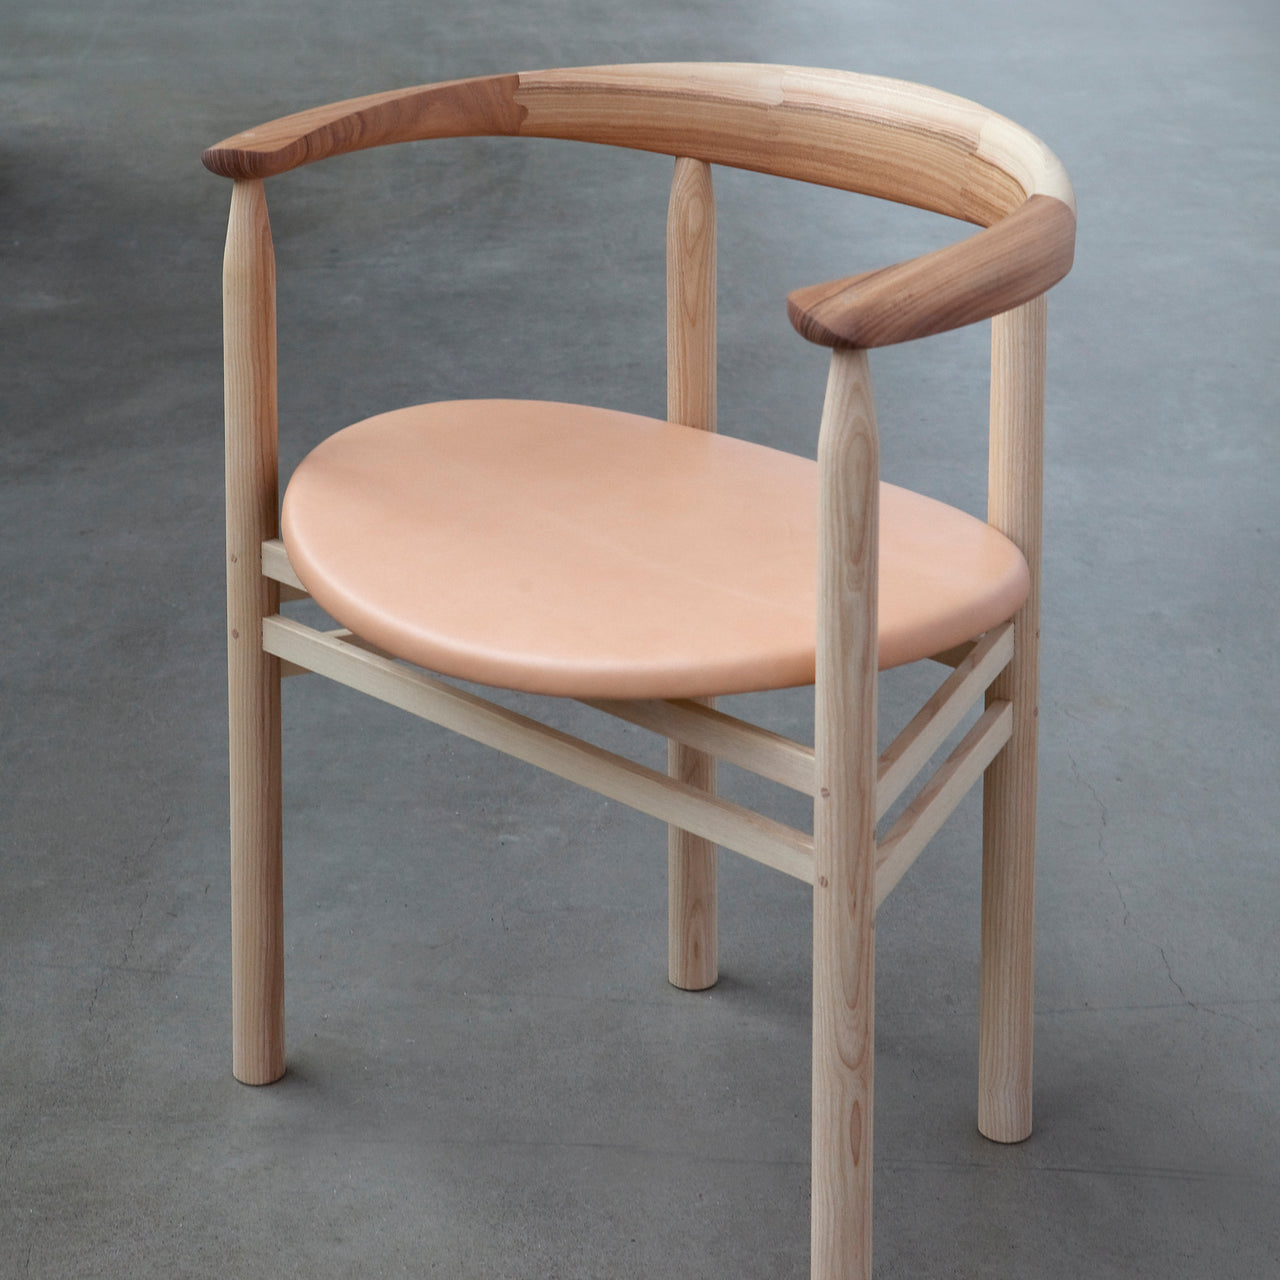 Linea RMT6 Chair